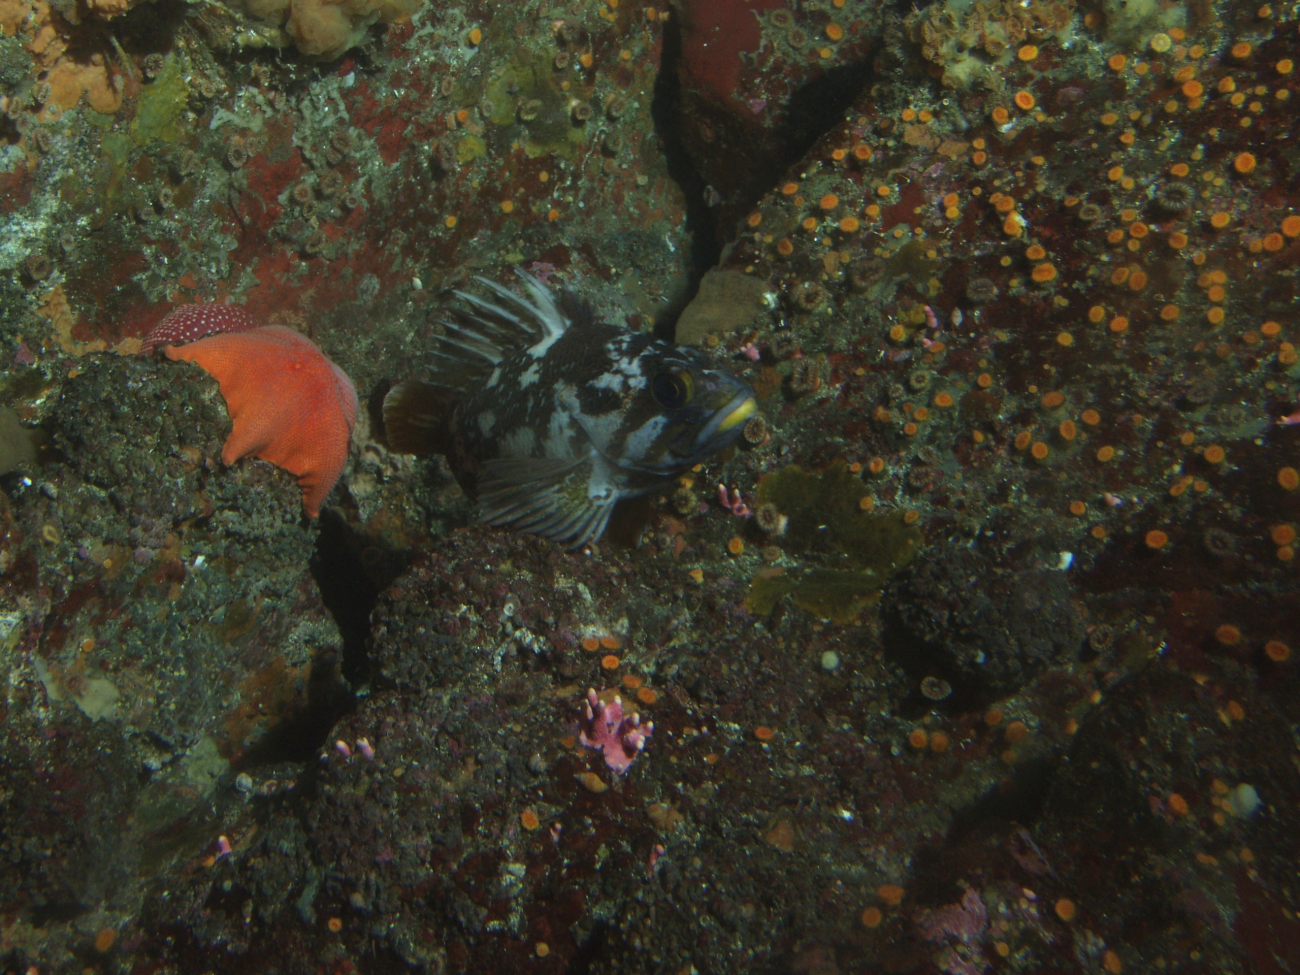 Gopher rockfish (Sebastes carnatus) with other invertebrates in crevice inrocky reef habitat at 25 meters depth